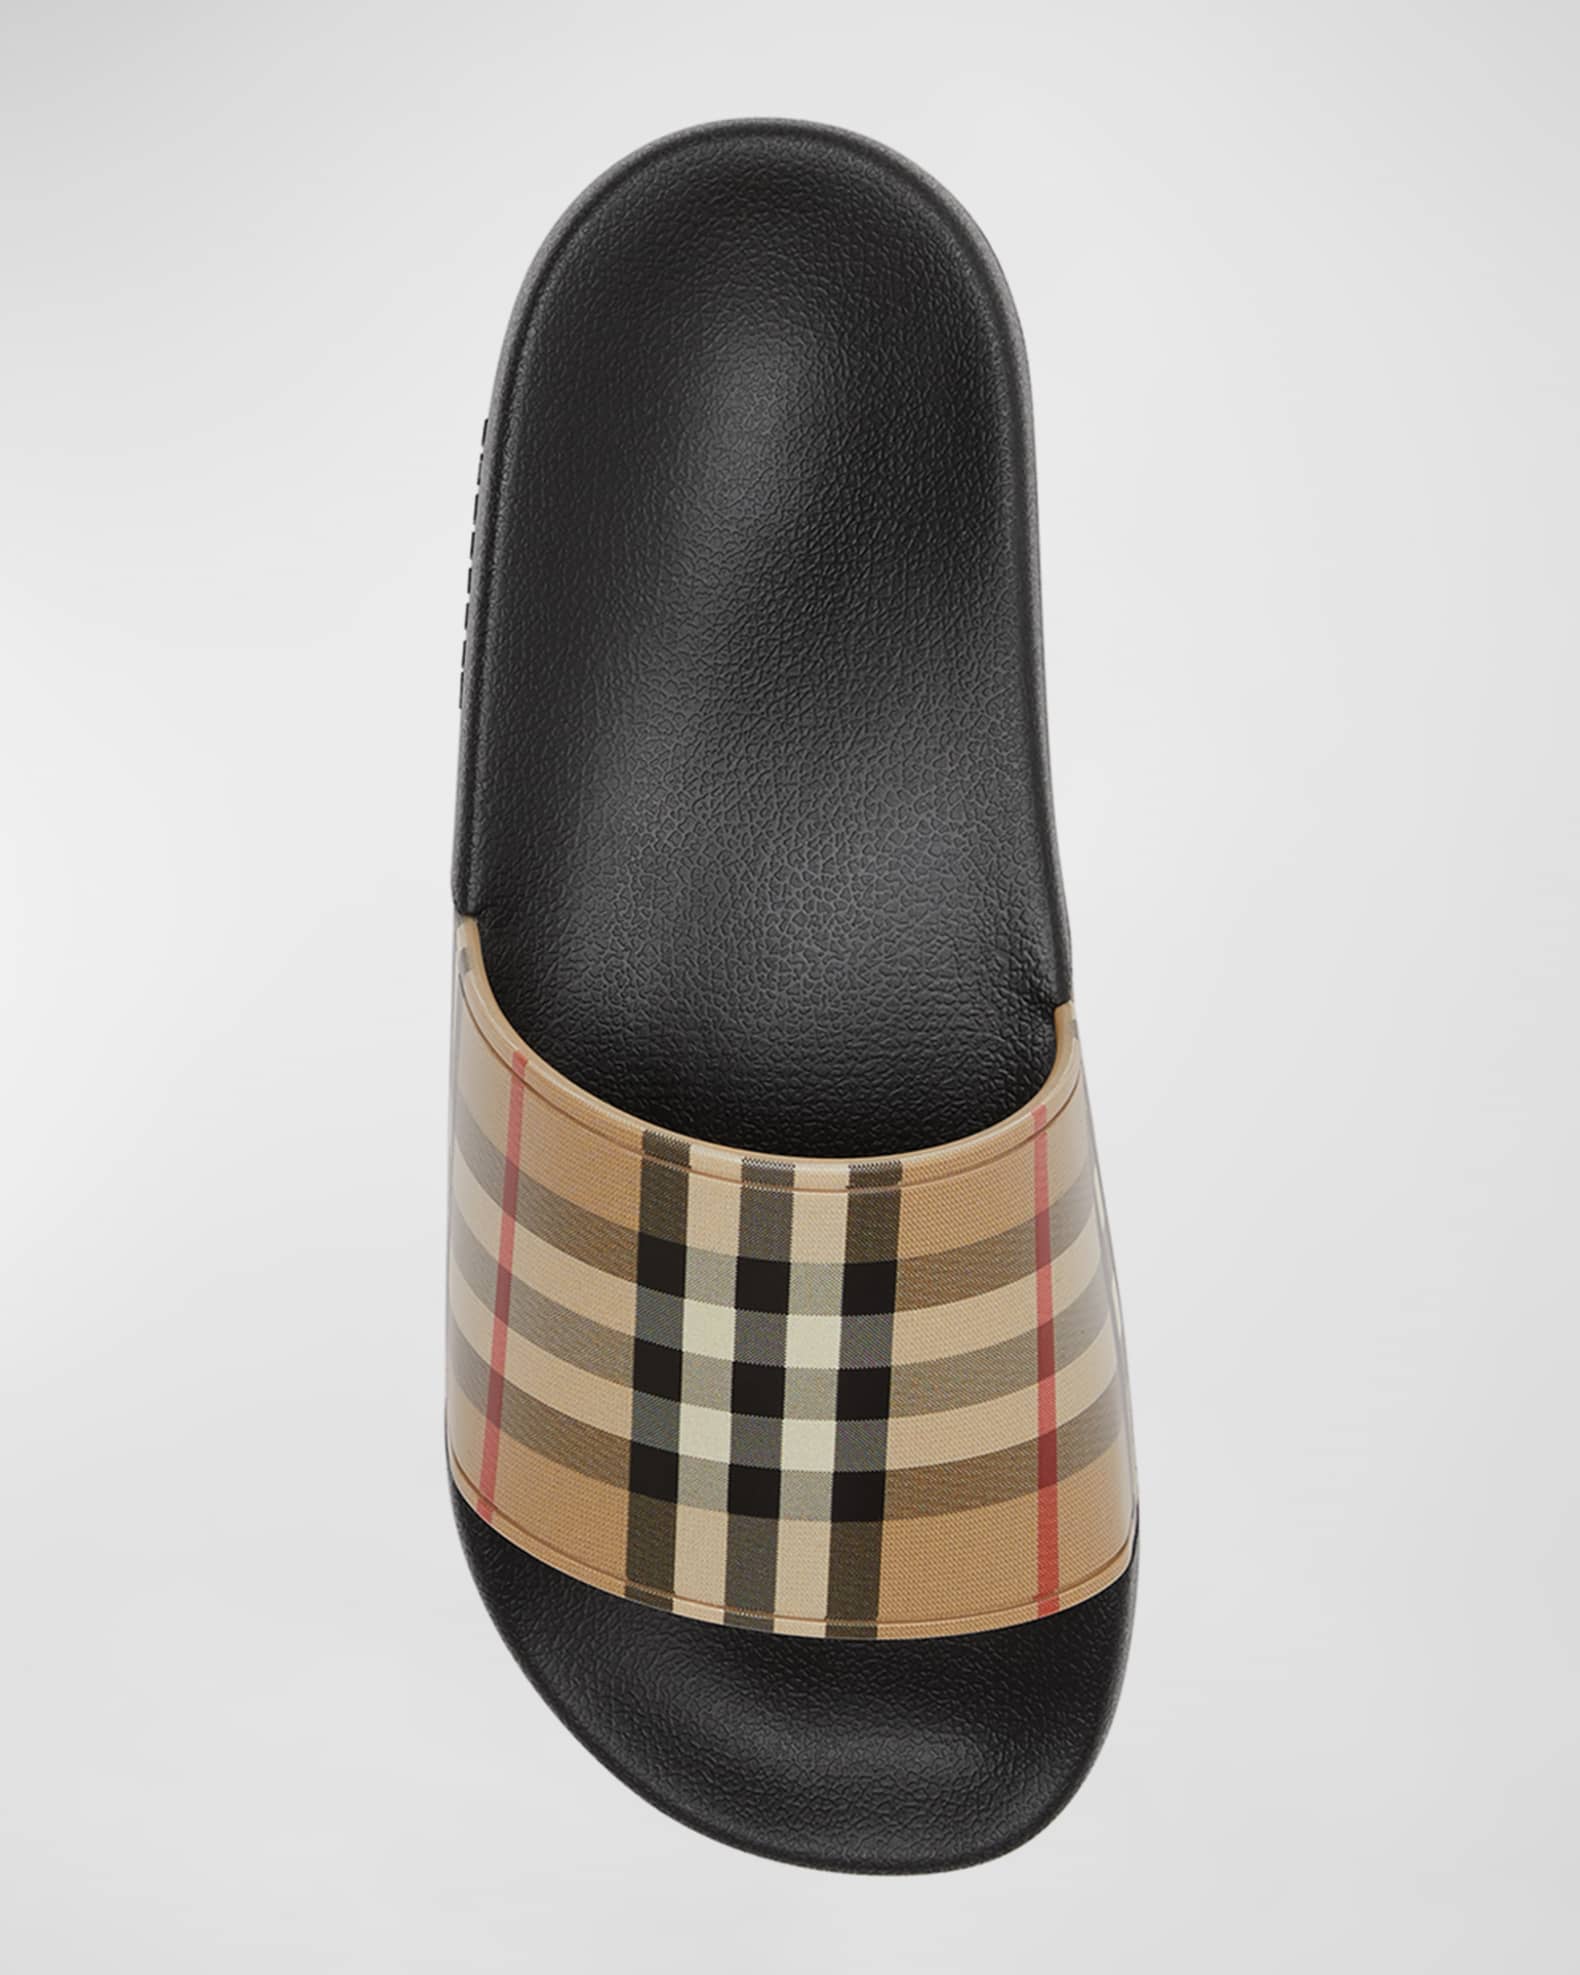 Burberry Furley Vintage Check Slide Sandals | Neiman Marcus